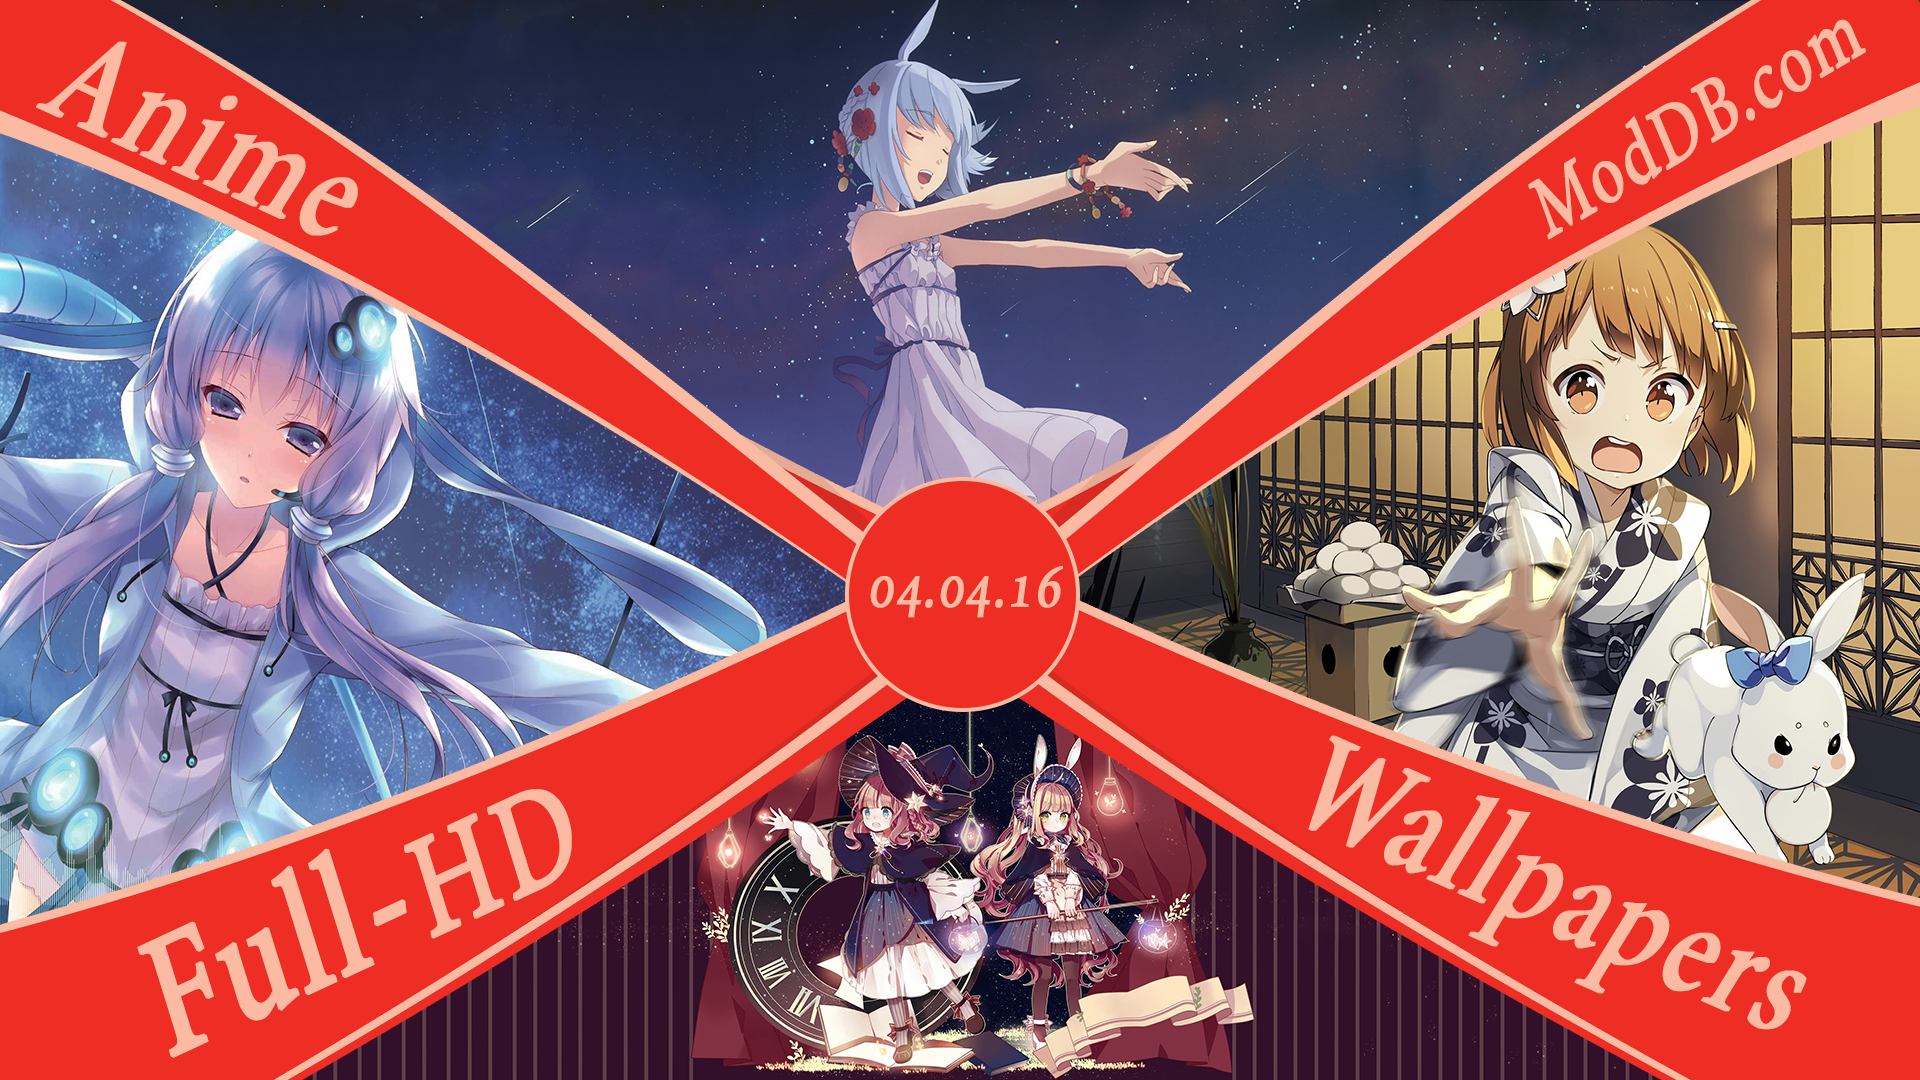 Old Anime Wallpaper's (Full-HD) - 02.02.16 file - Mod DB